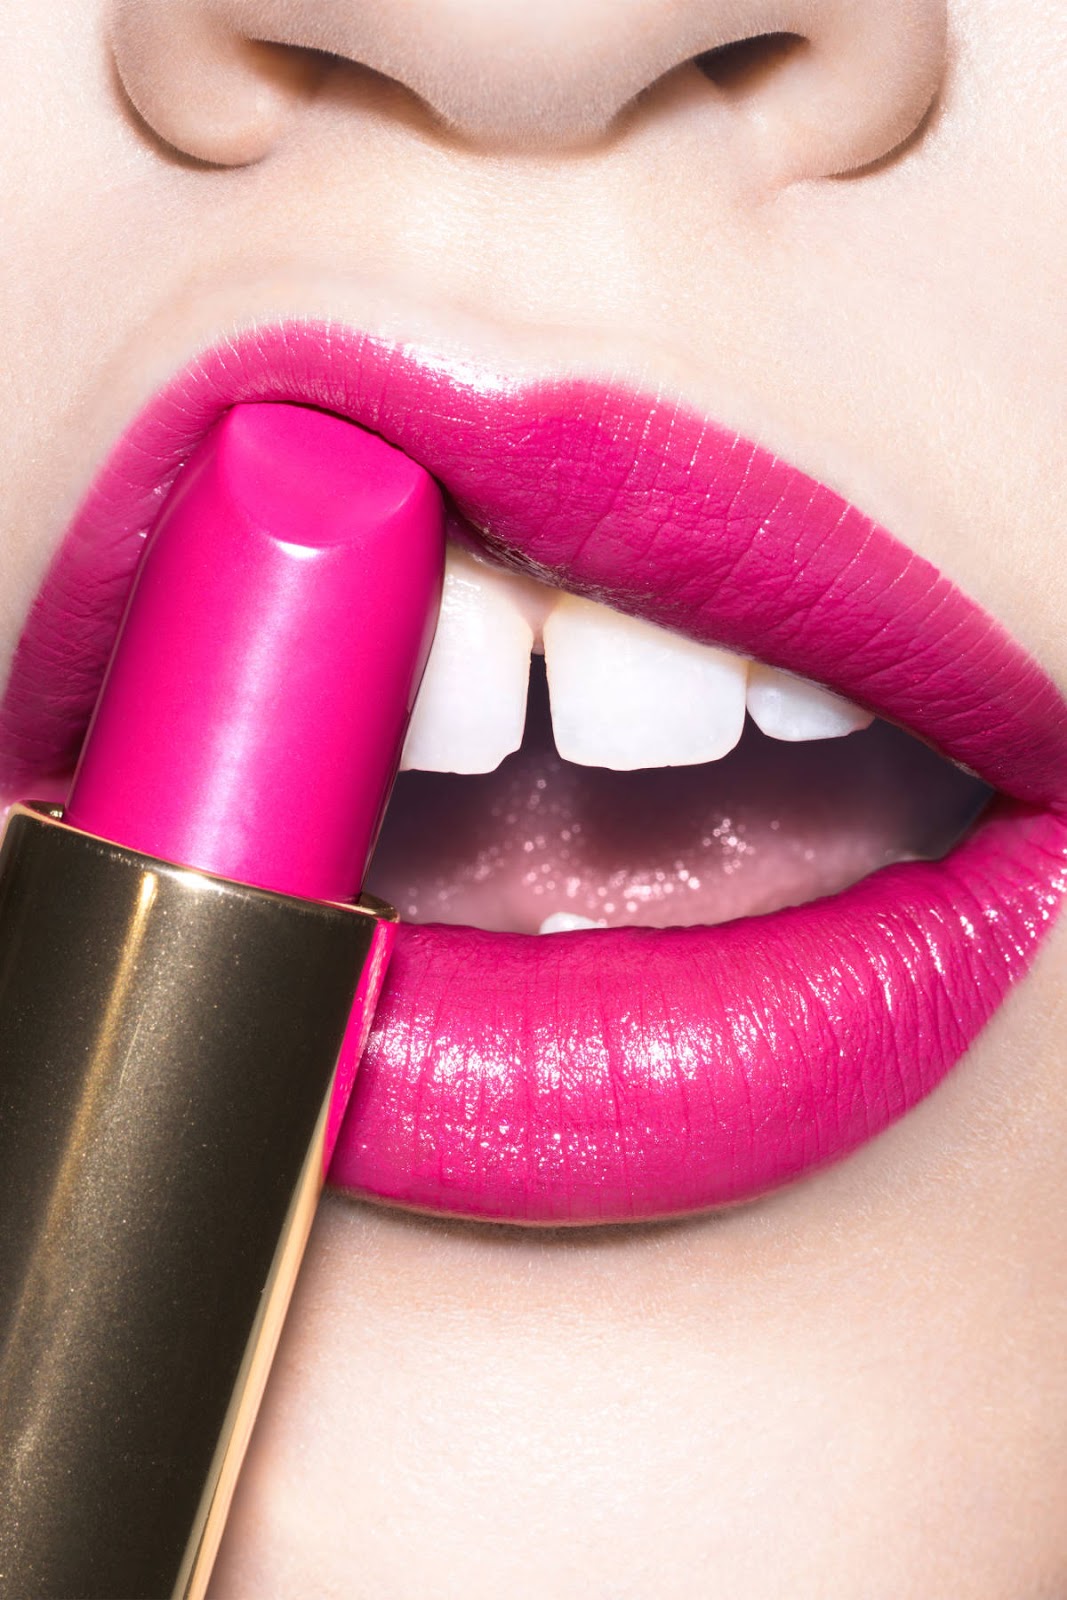 Lipsticks that Make Your Teeth Look WHITER!